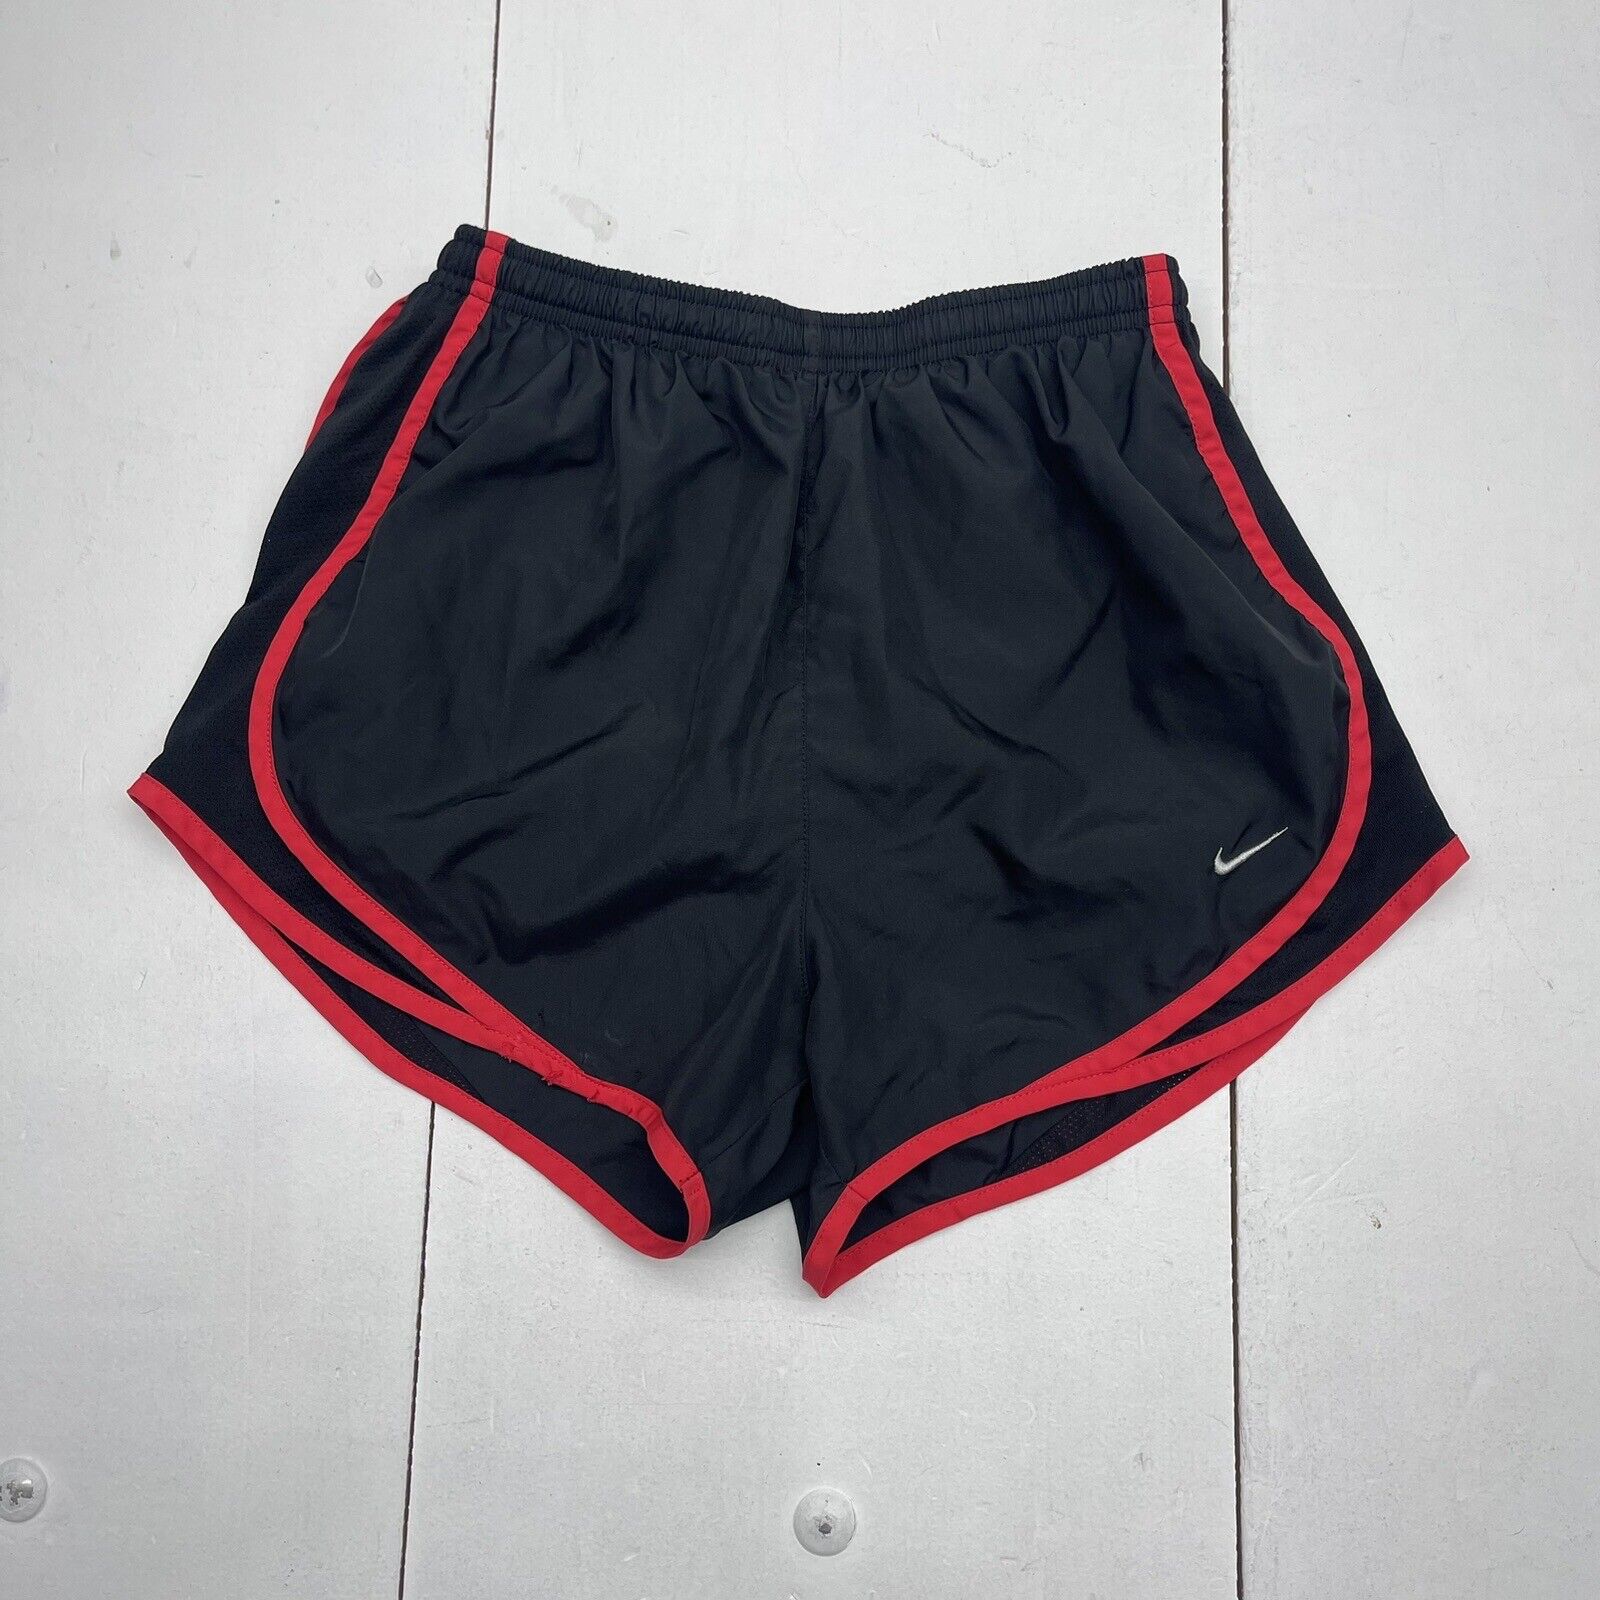 Nike Dri Fit Black & Pink Trim Athletic Shorts Women’s Size Small